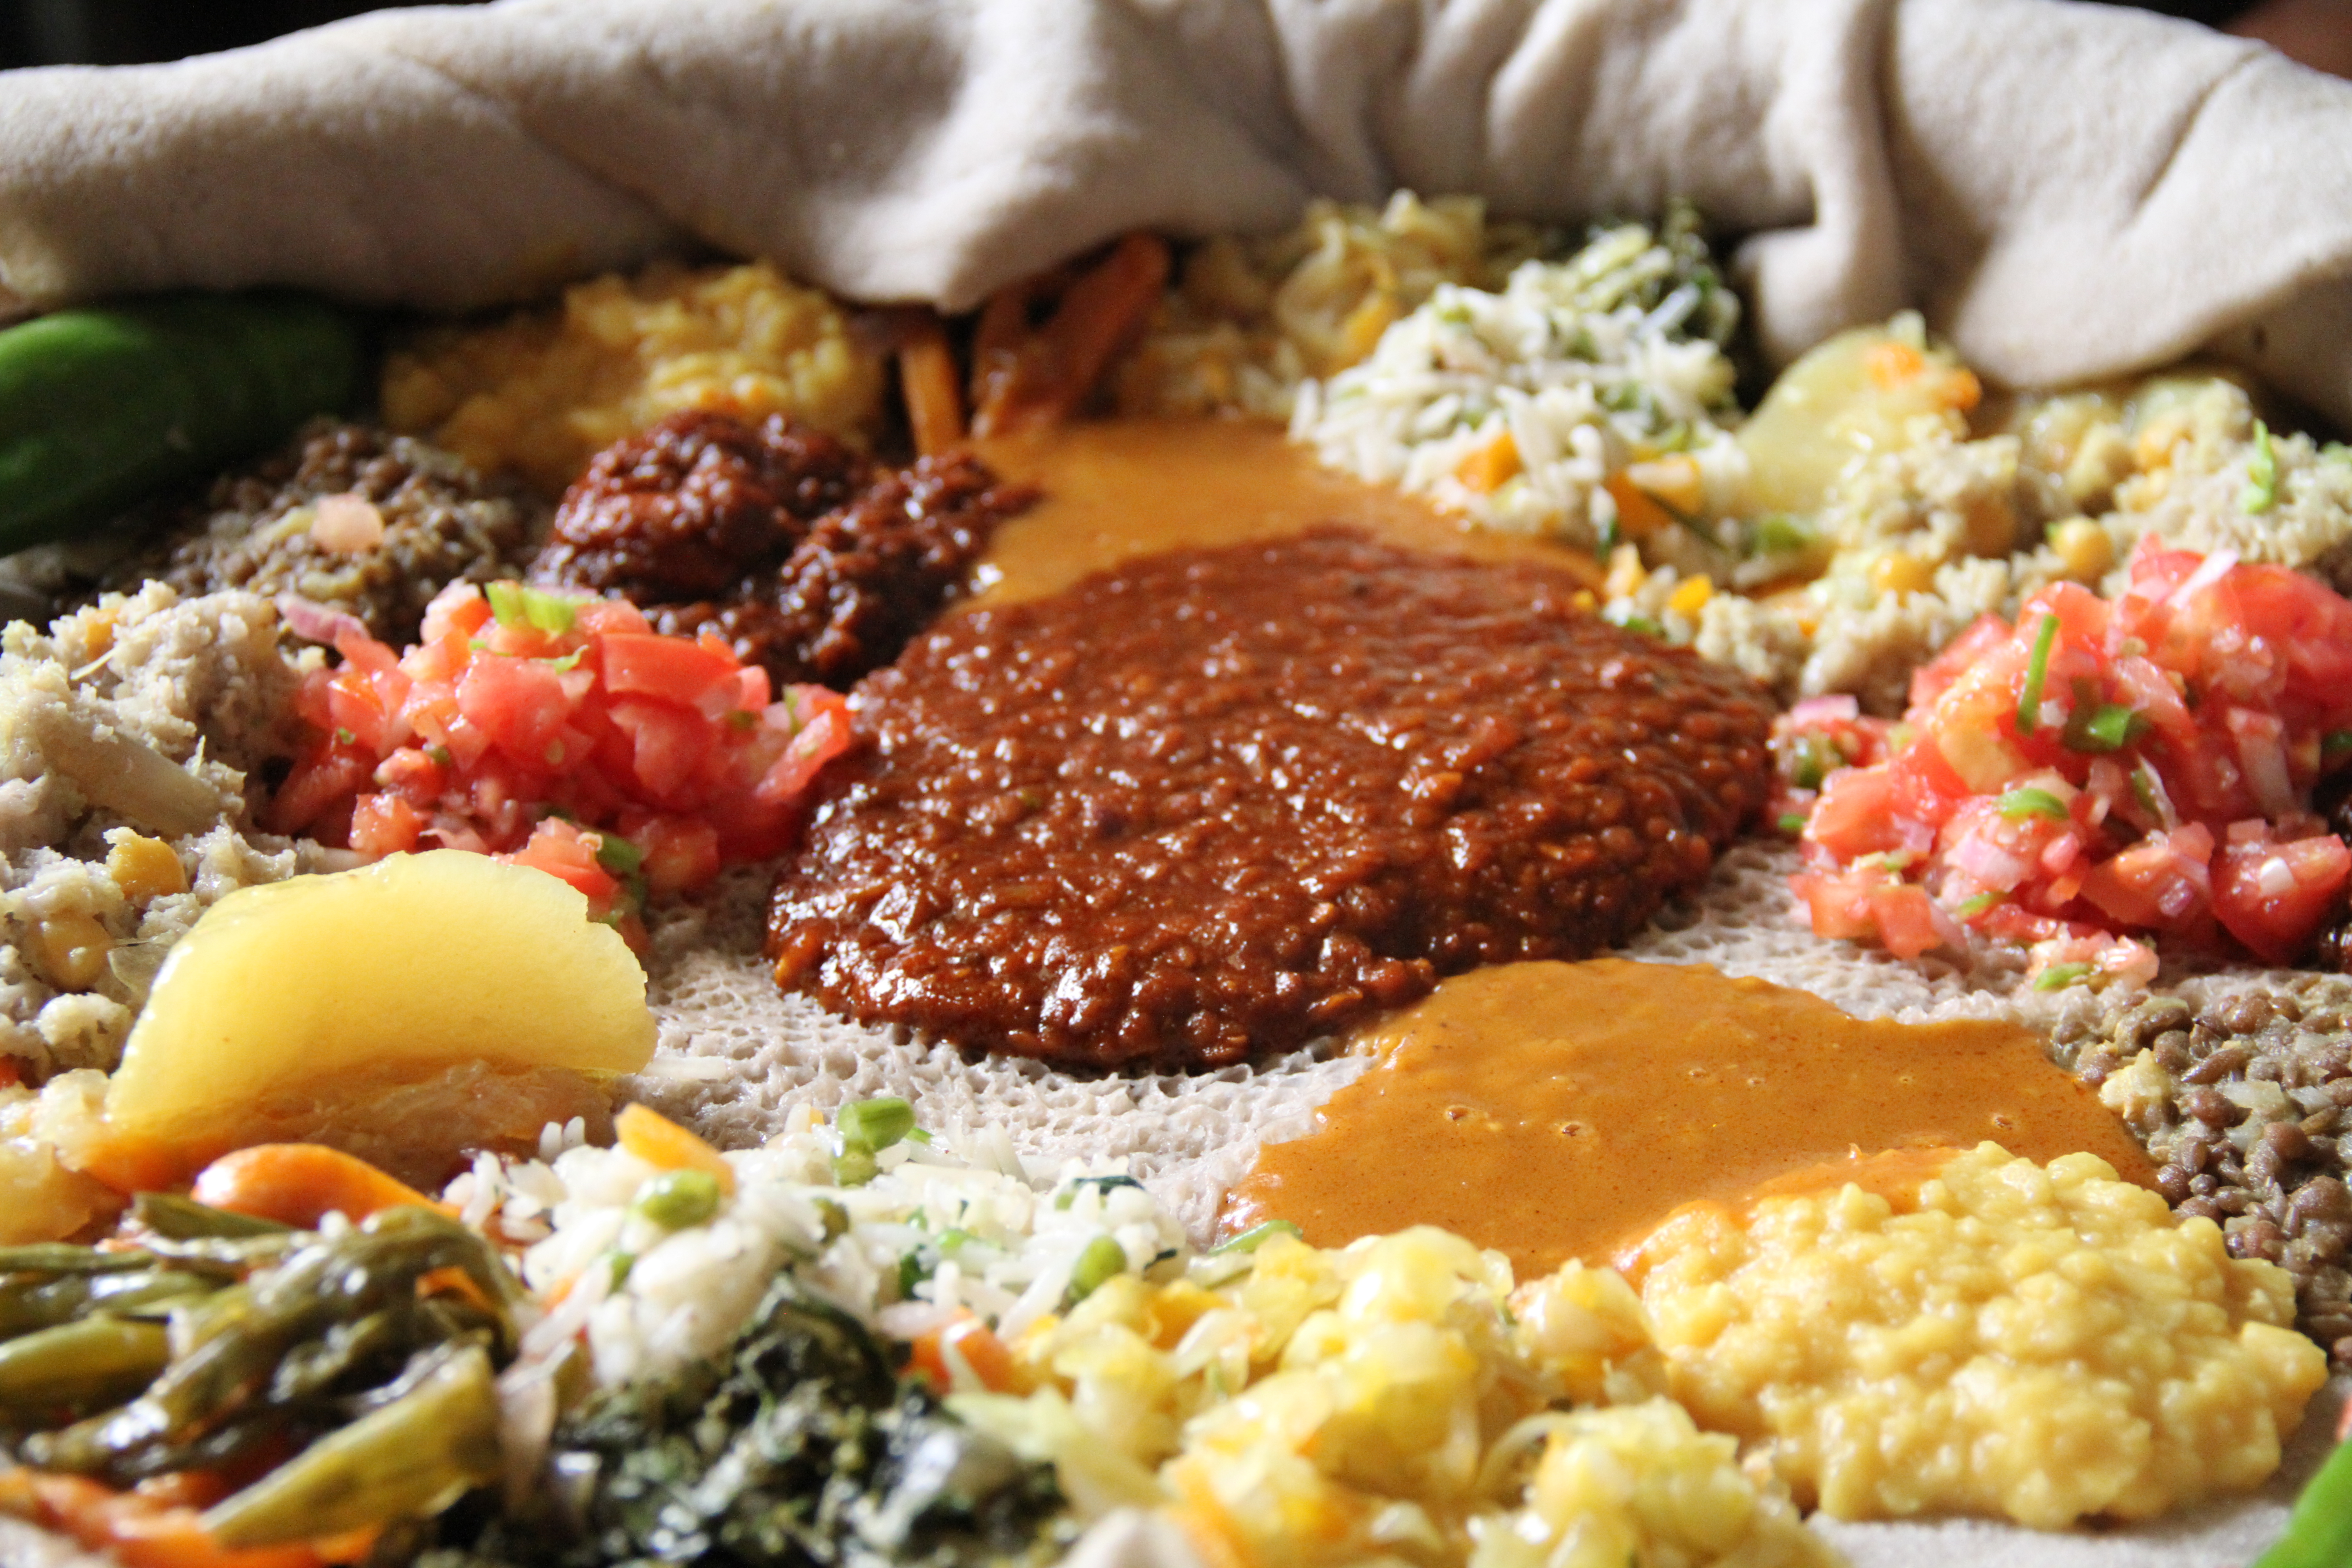 Beyaynet - a vegetarian dish usually eaten for Lent (photo courtesy of AddisEats)